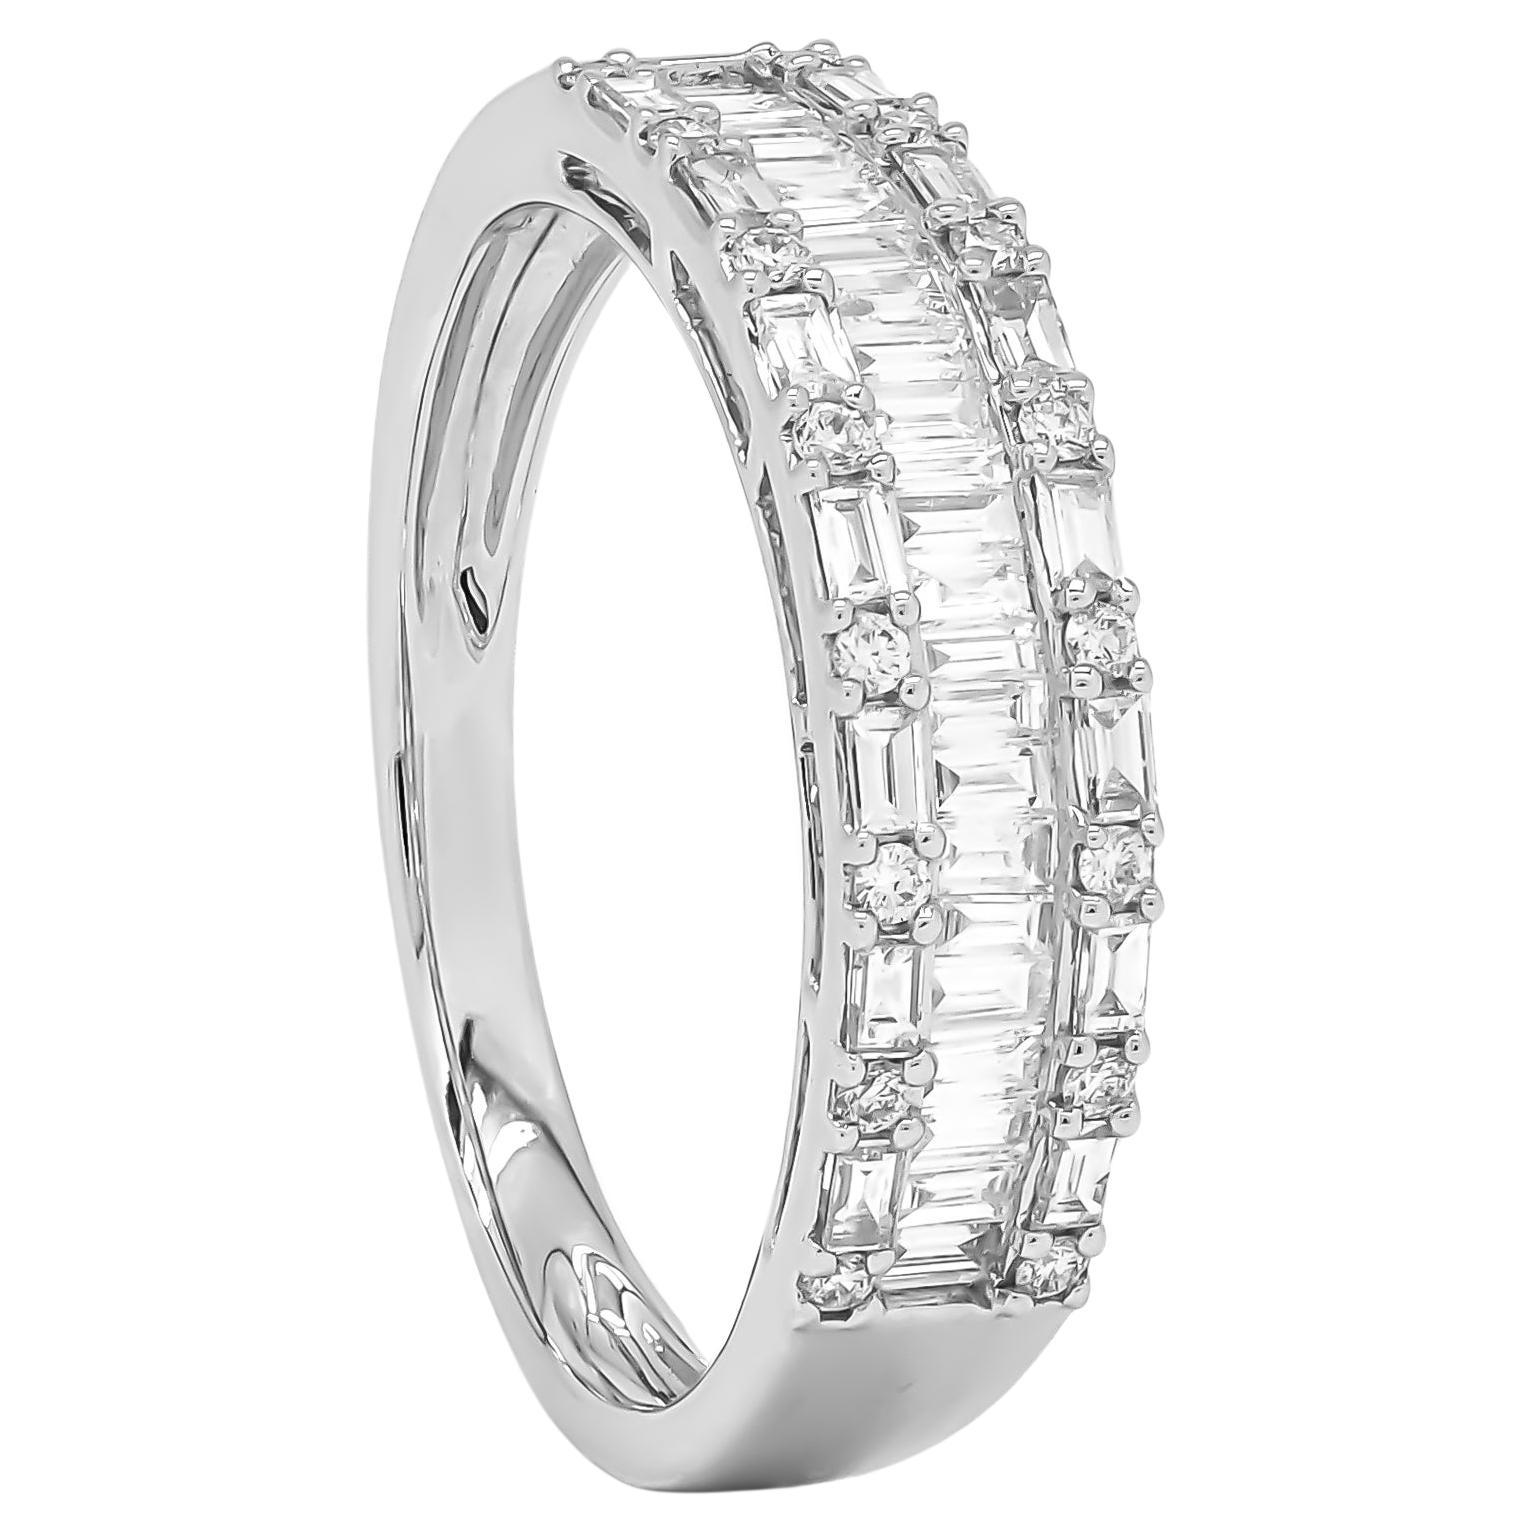 Exclusive Design 0.70 Carat Baguette Diamond Wedding Ring in White Gold